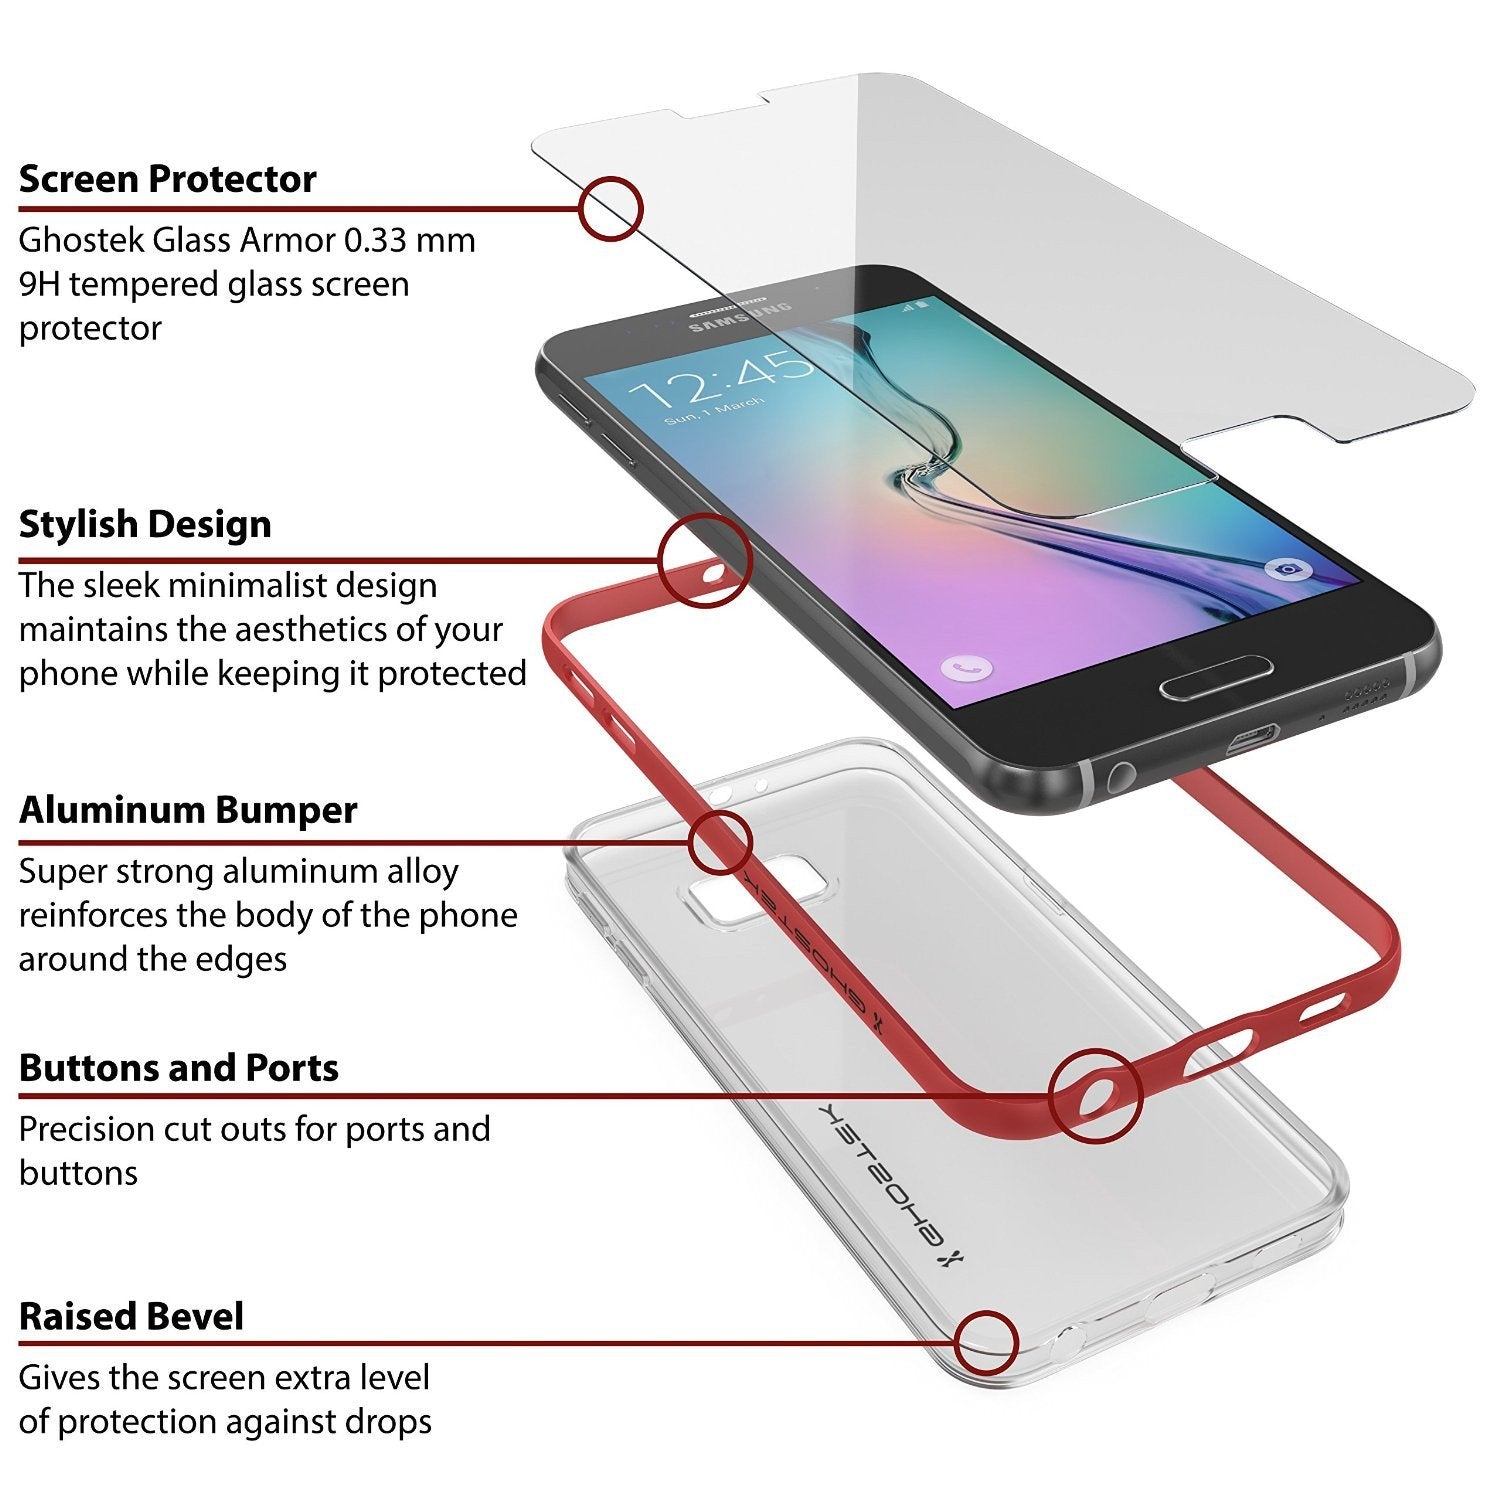 Galaxy S6 Case, Ghostek Cloak Series Red  Slim Premium Protective Hybrid Impact Glass Armor - PunkCase NZ